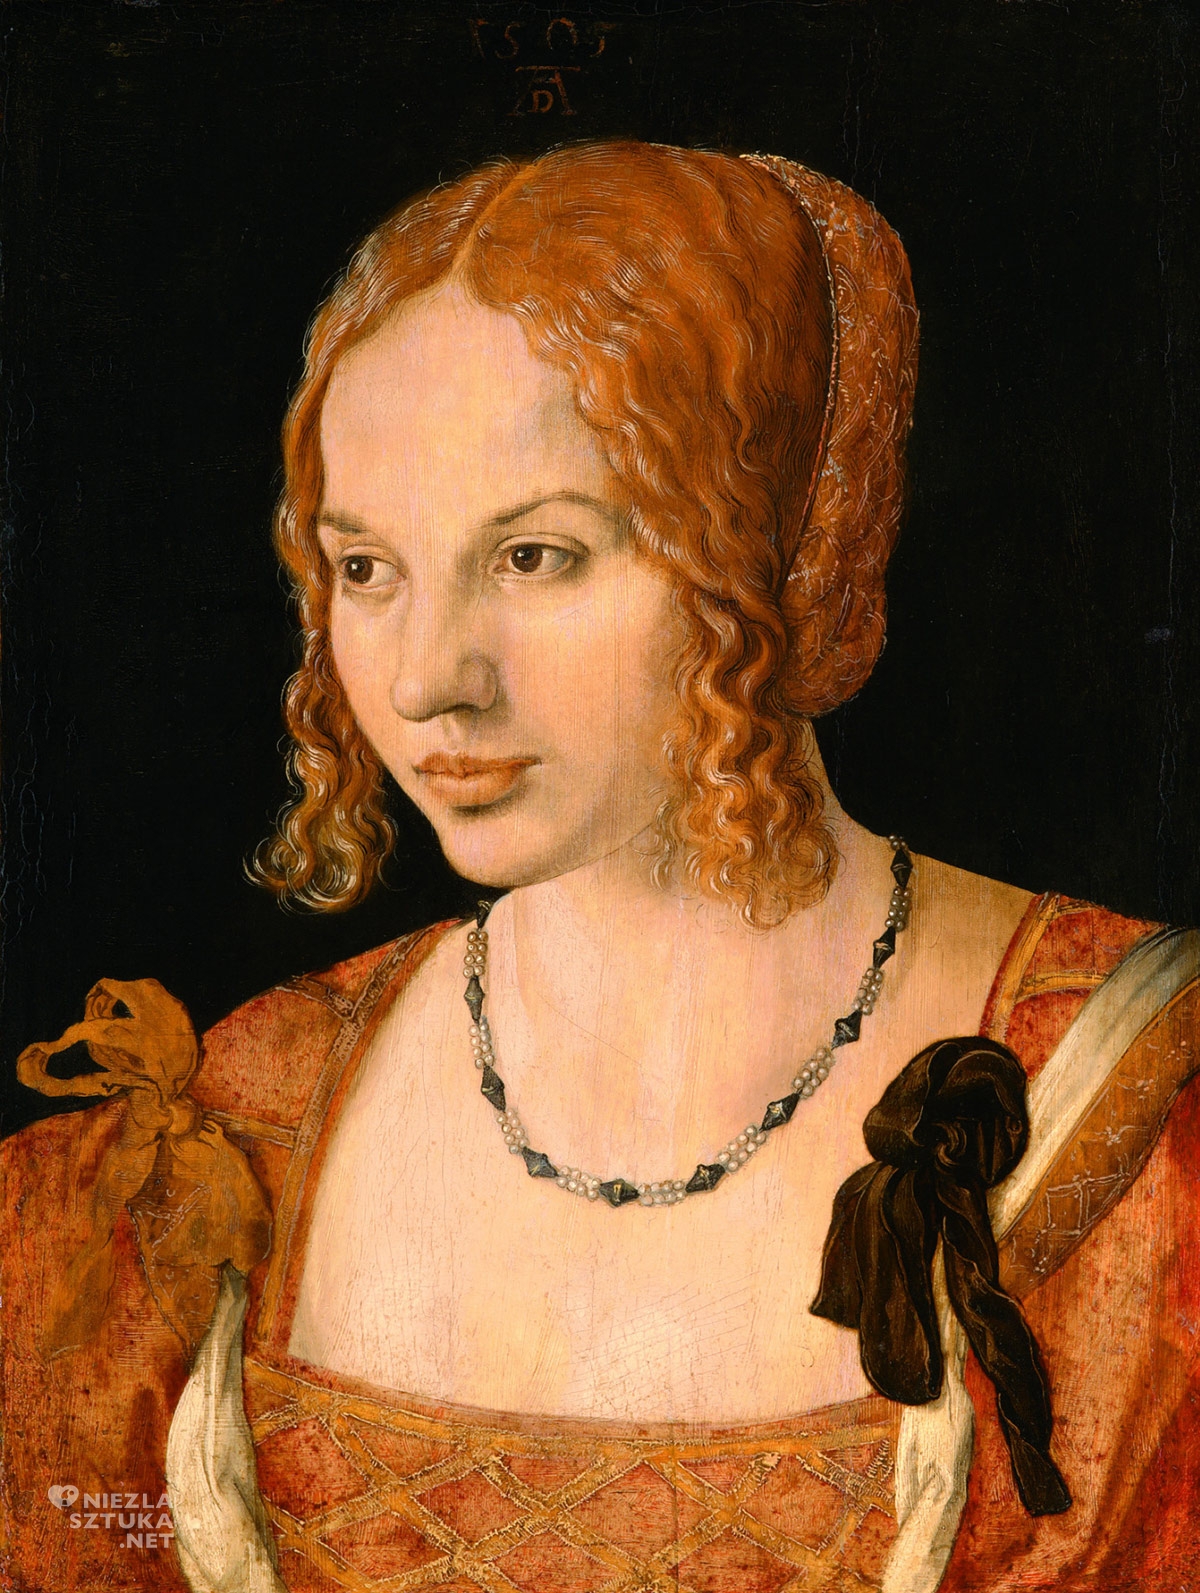 Albrecht Durer, Portret młodej Wenecjanki, Niezła sztuka